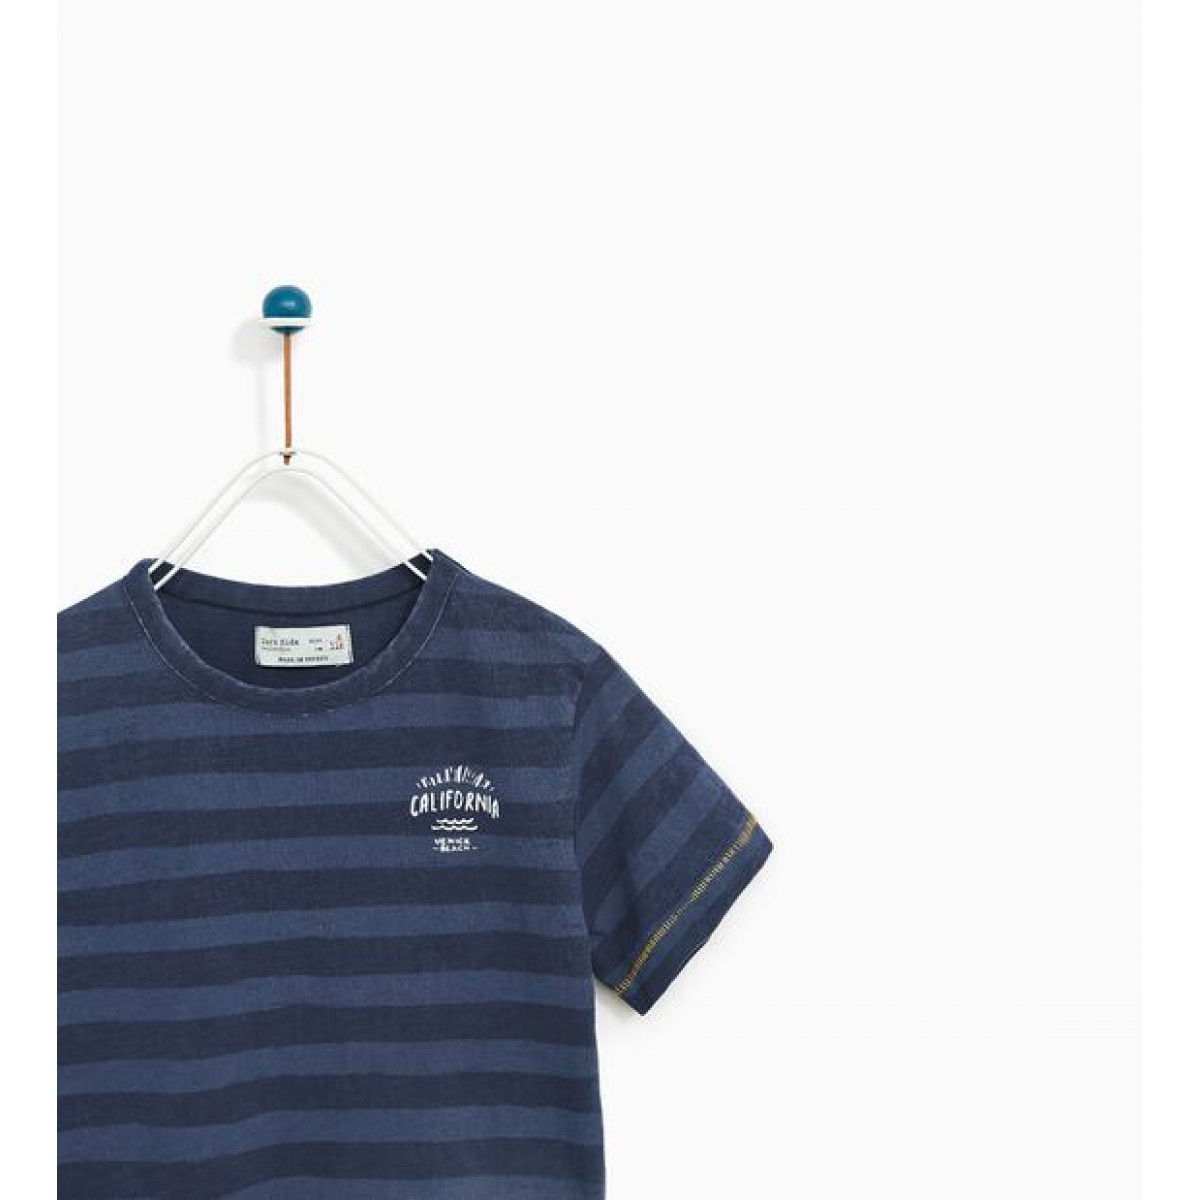 Zara Striped T-Shirt With Text